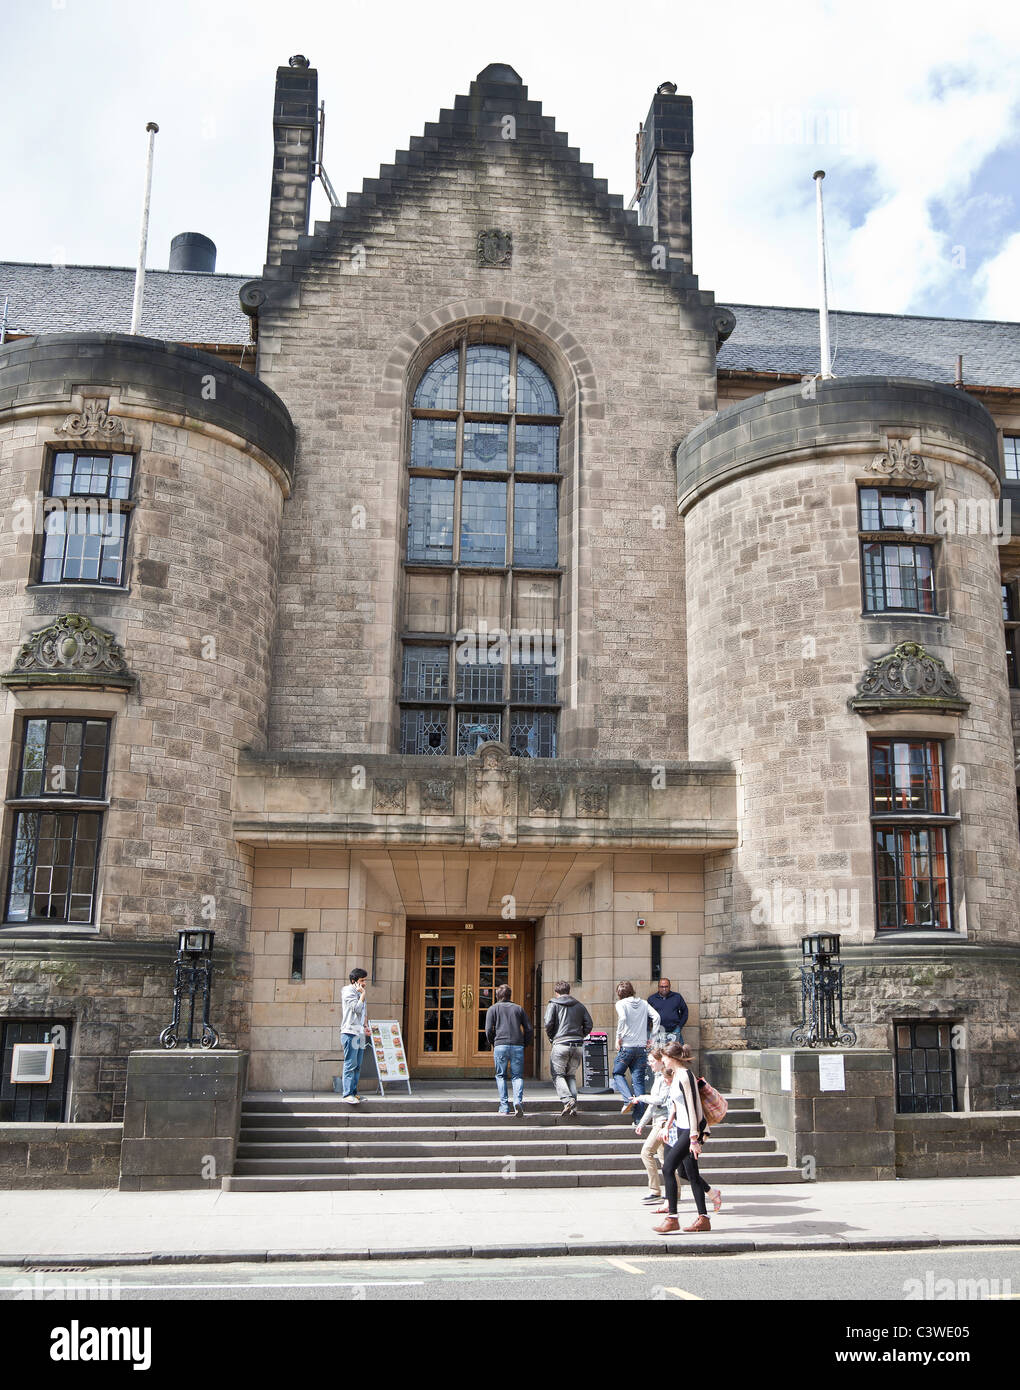 Studenten in Glasgow University Union Baustil, Scots Baronial, entworfen von Alan McNaughton, eröffnete in1932. Stockfoto